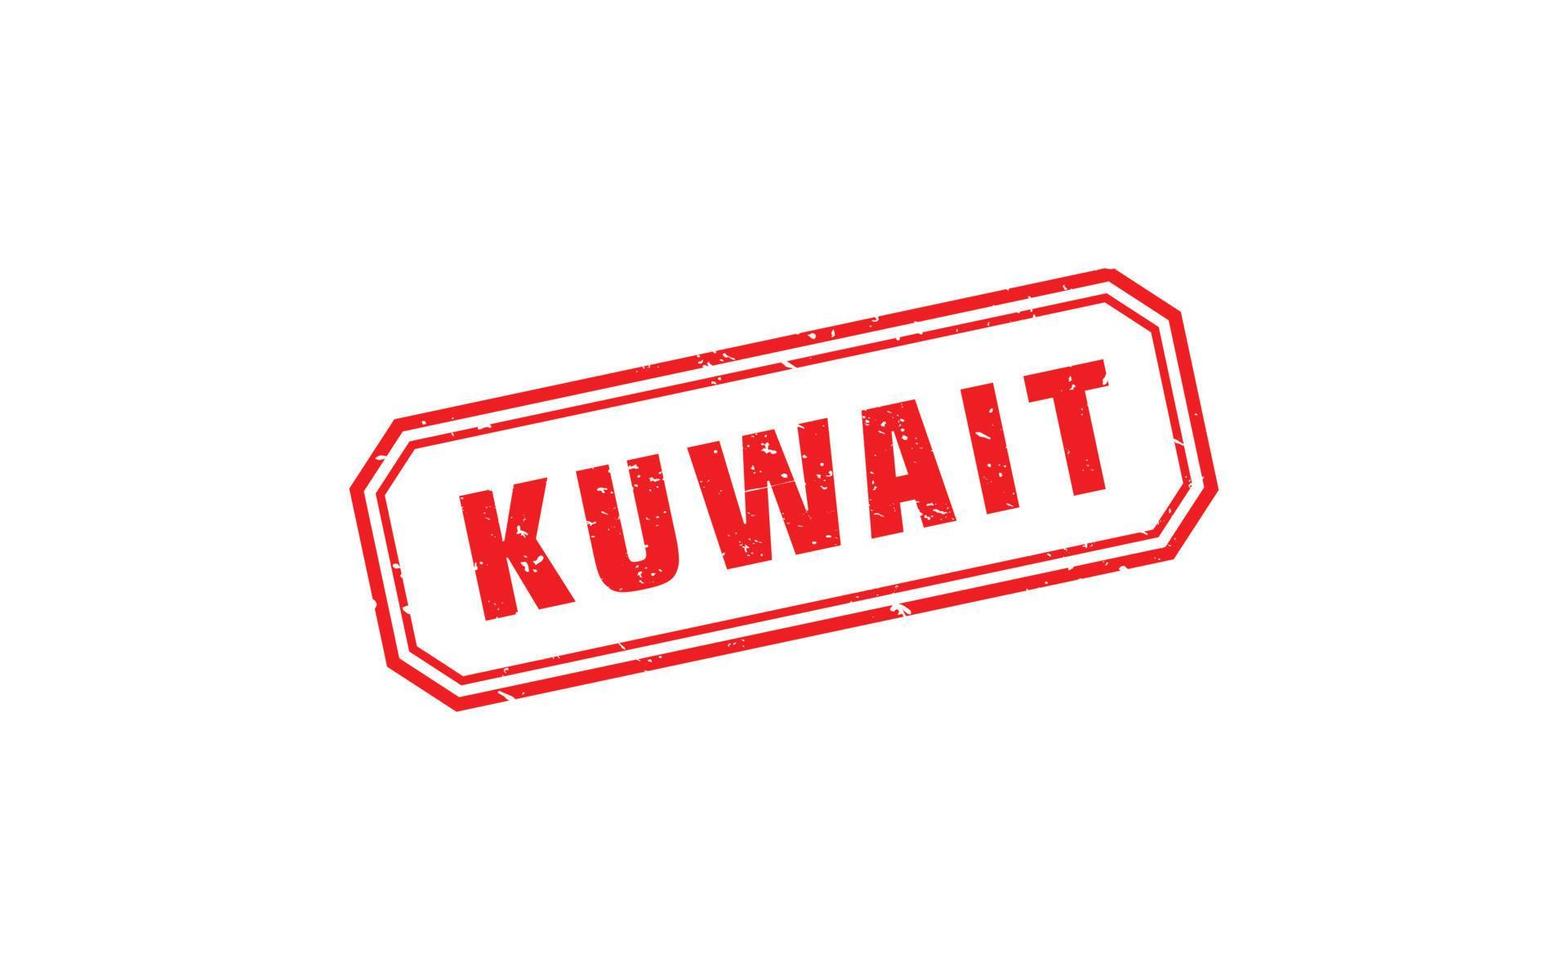 borracha de carimbo do kuwait com estilo grunge em fundo branco vetor